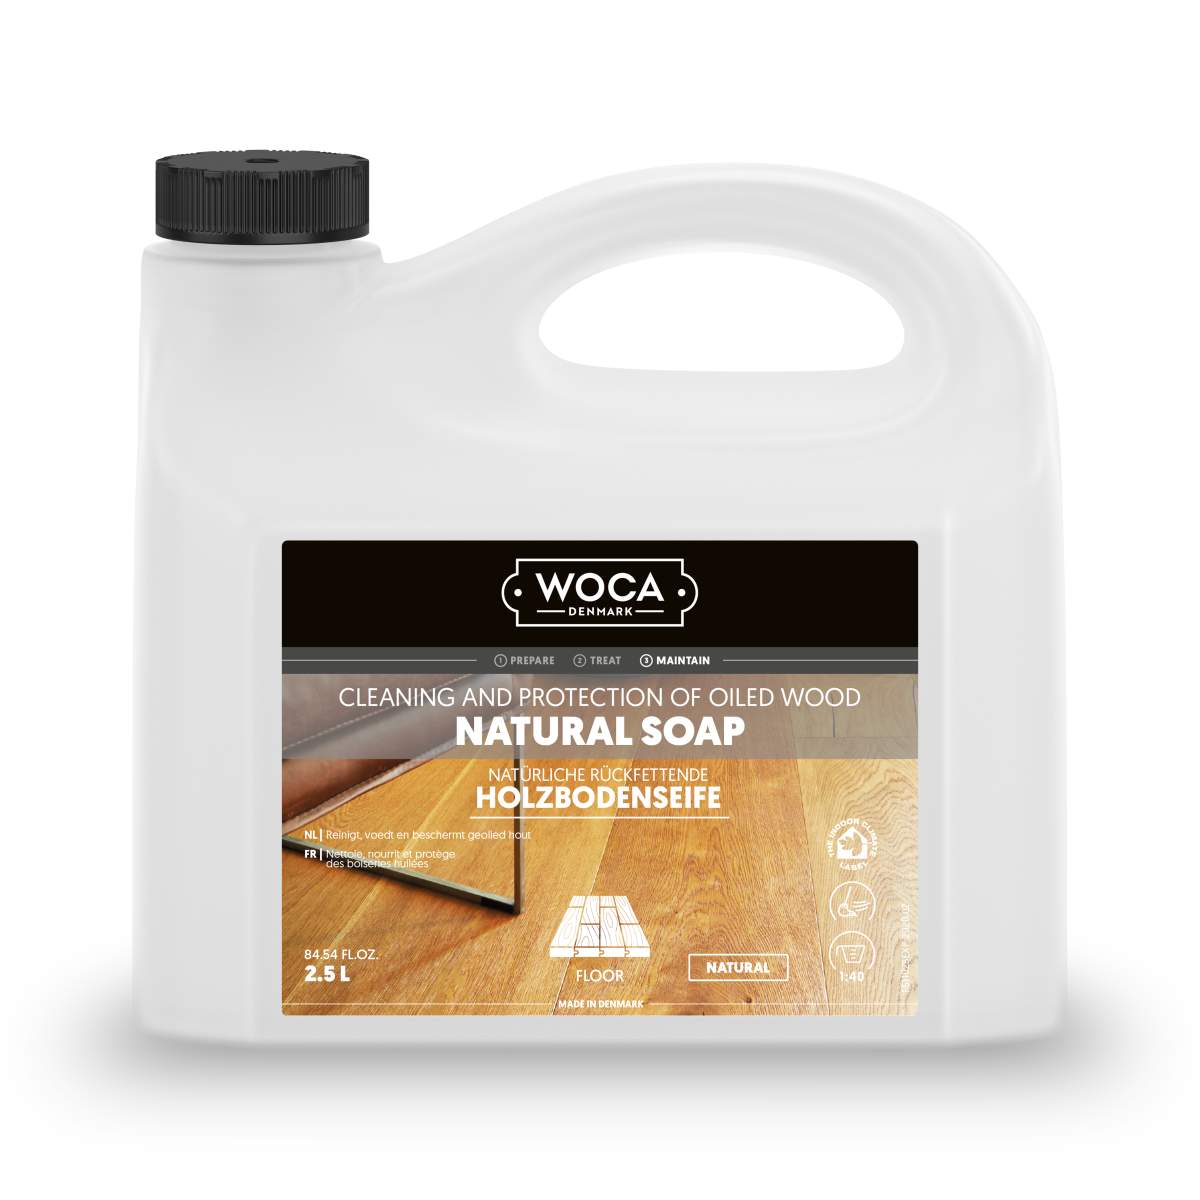 WOCA Bodenseife Natur Natural Soap 2,5 Liter